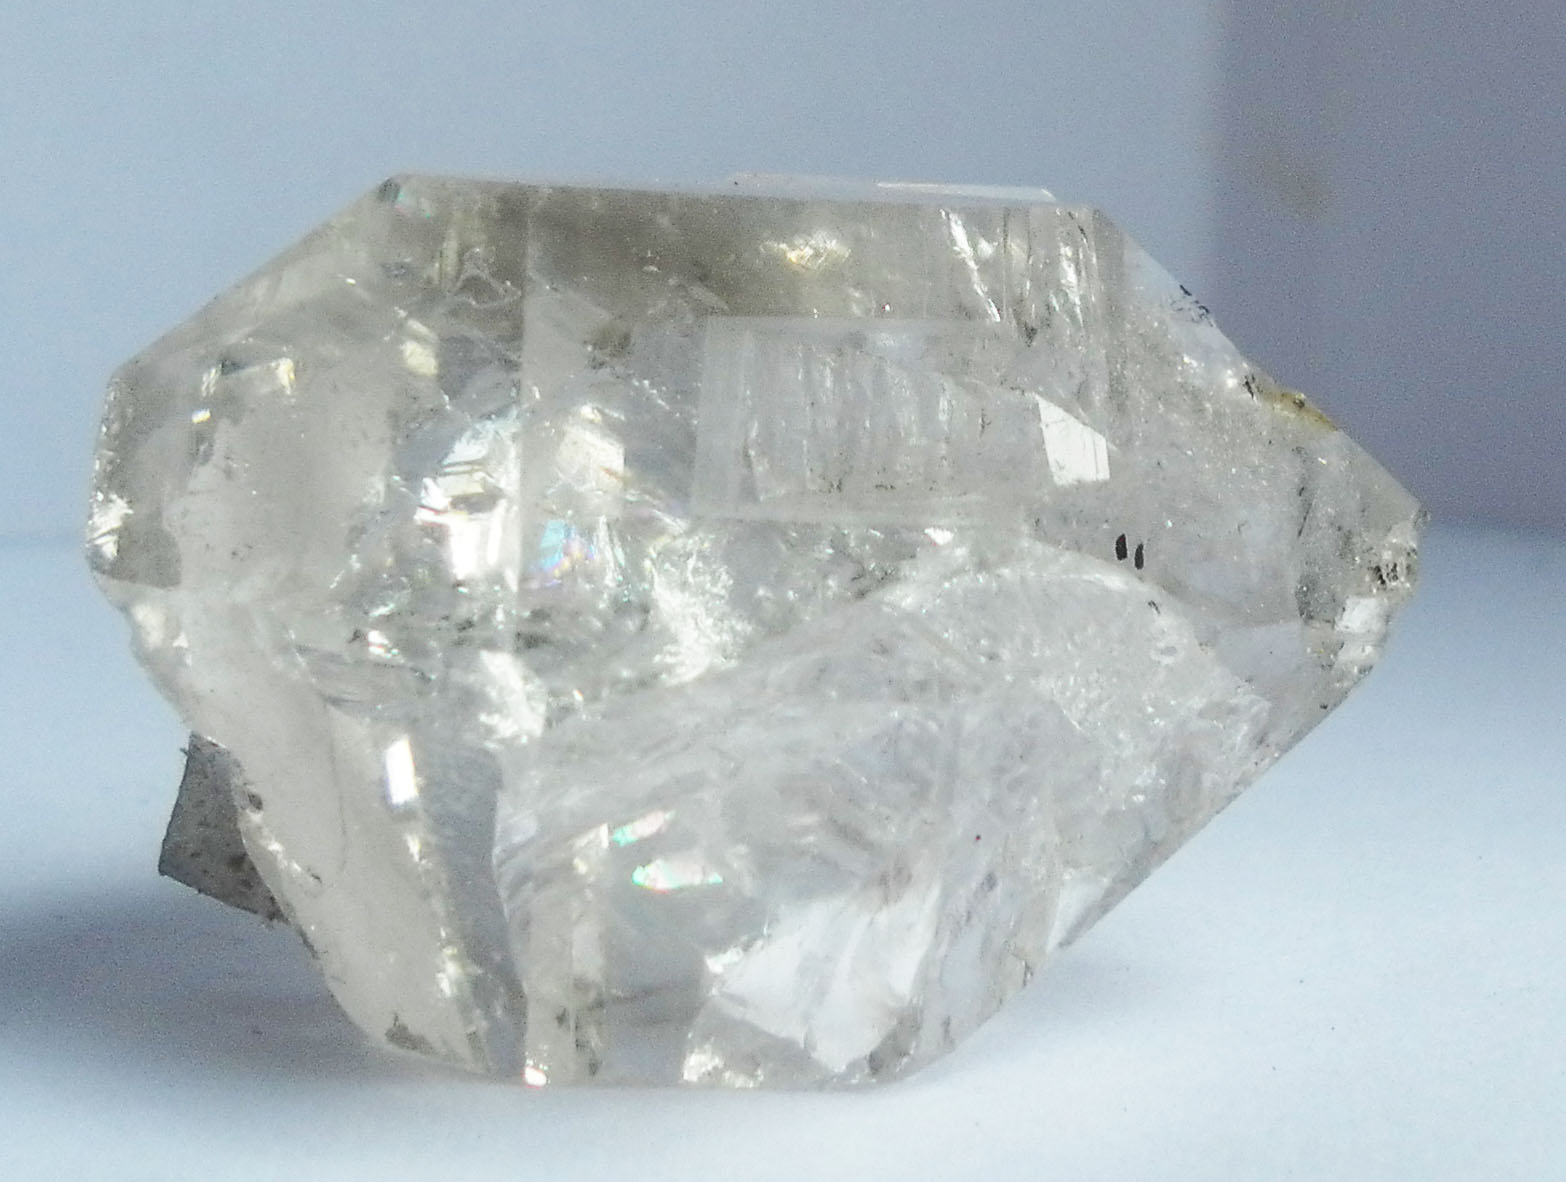 Originallydiamond